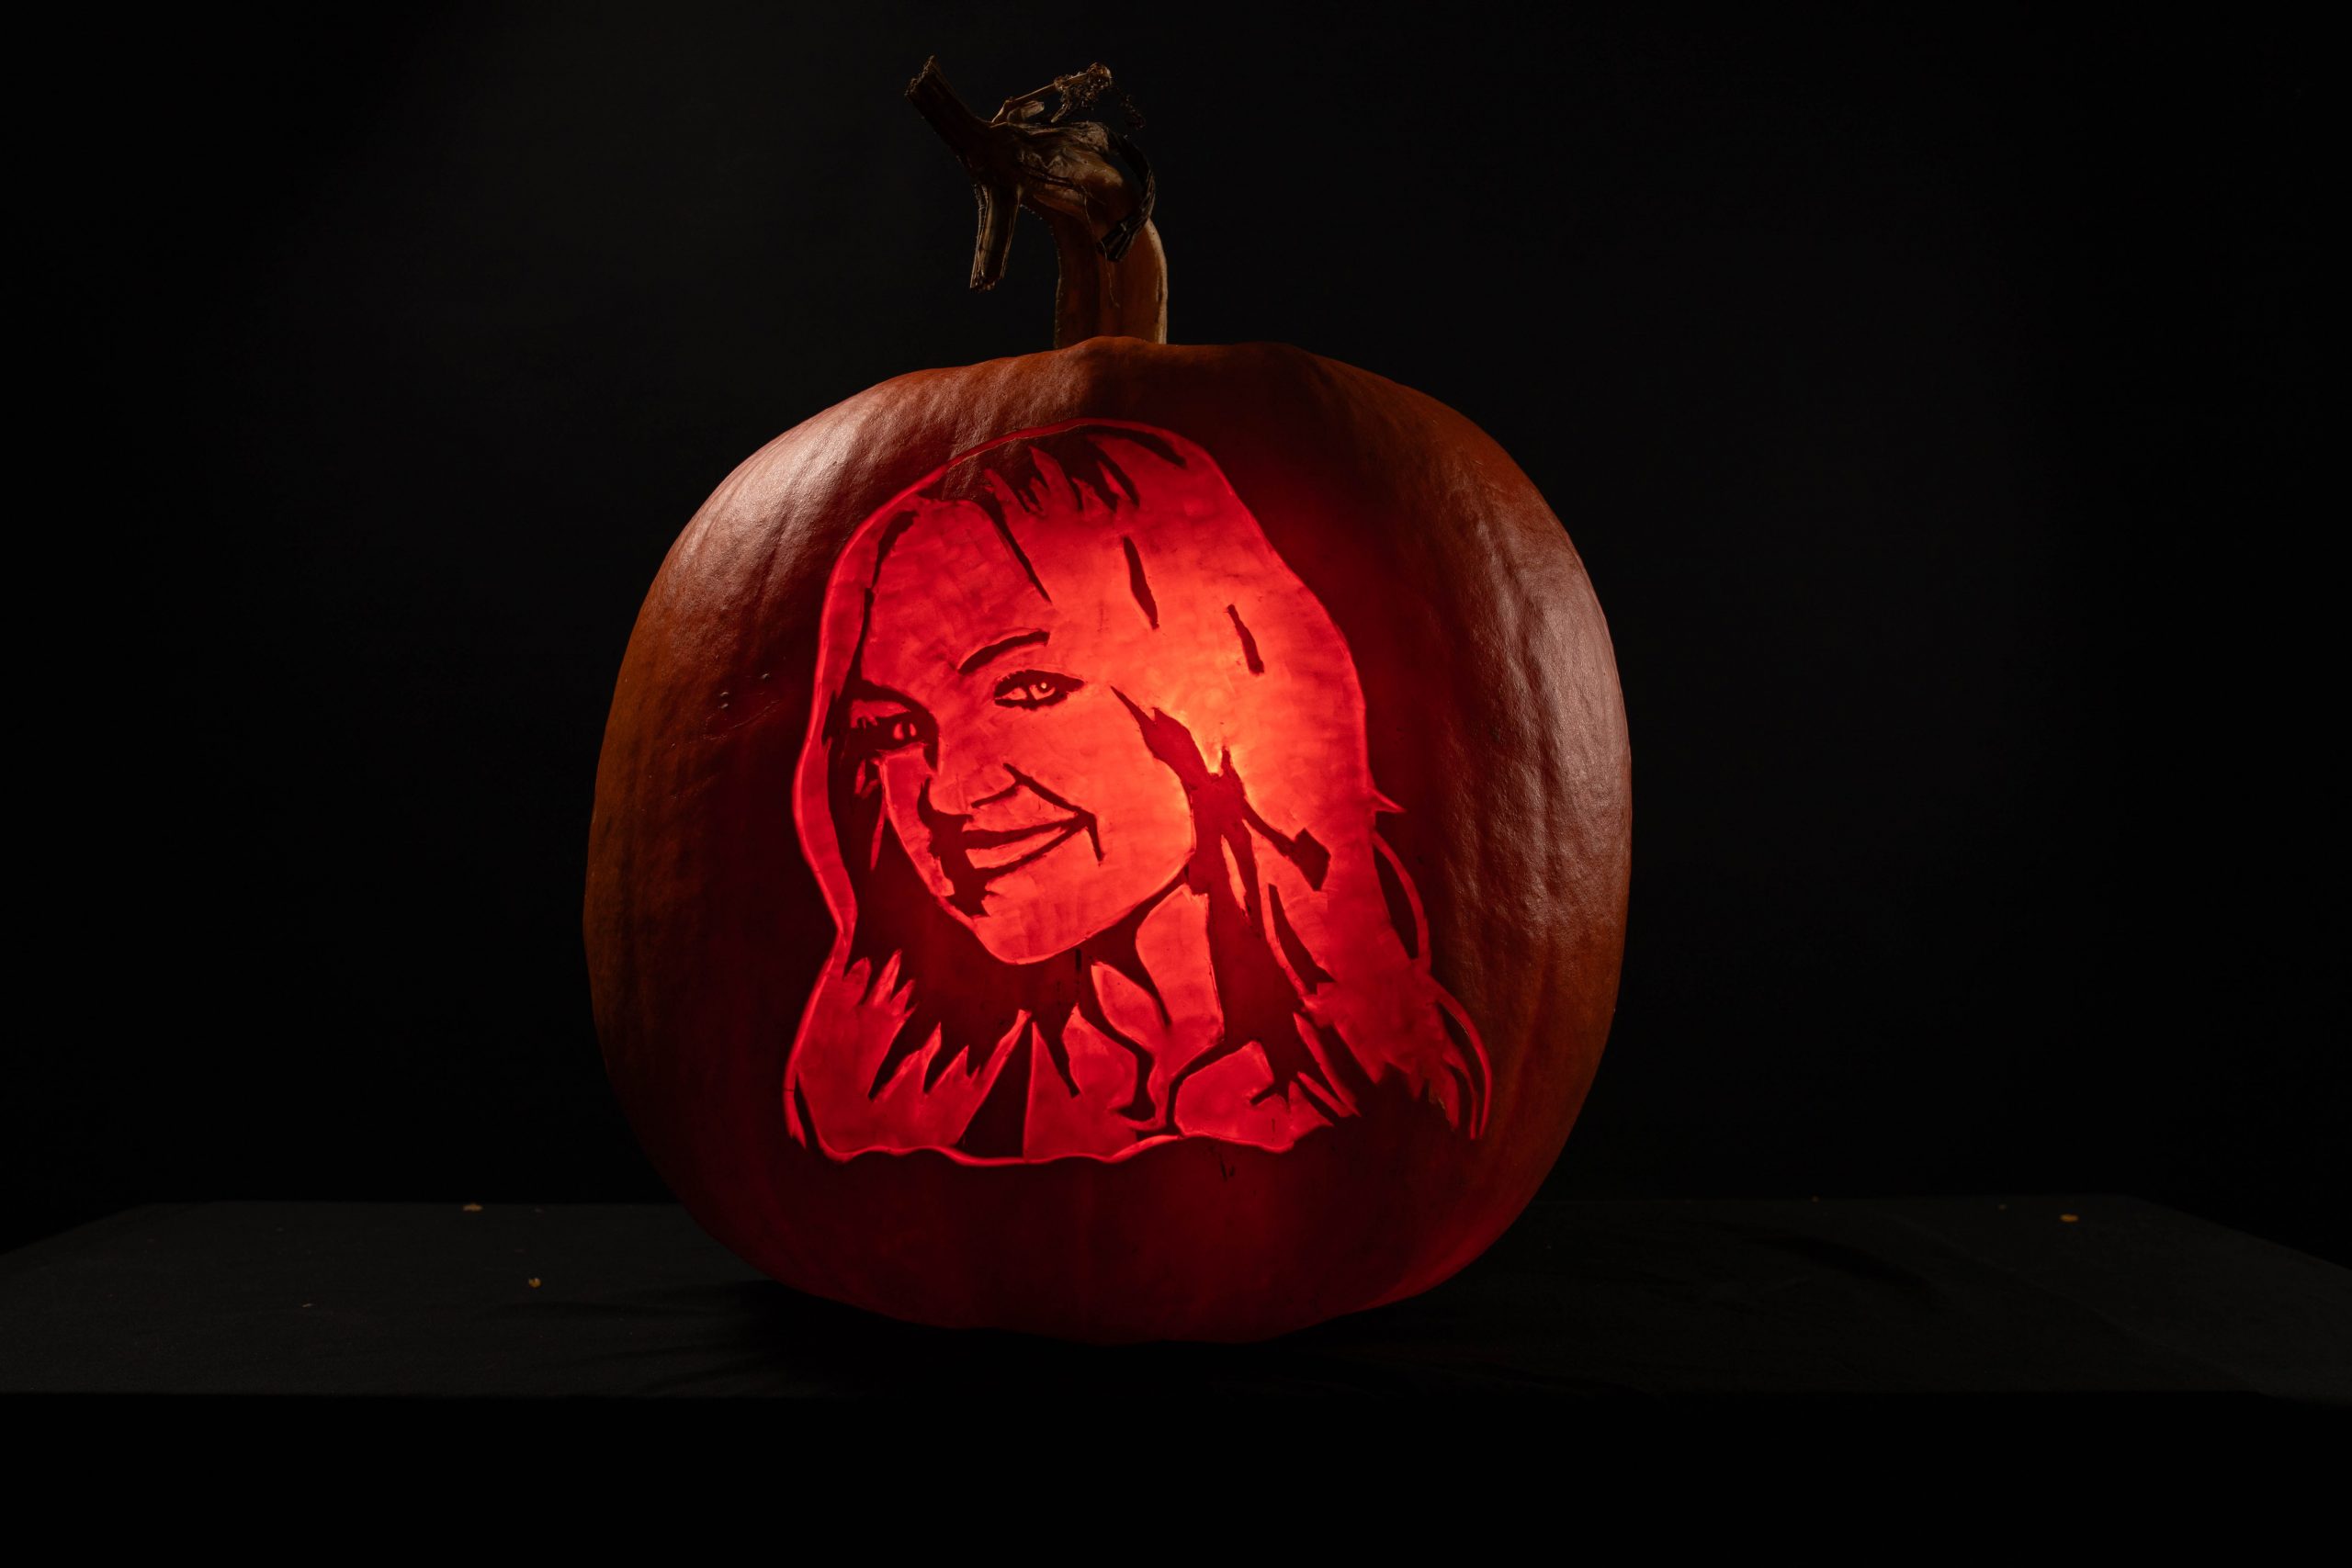 Ready for some Pumpkin Spice? Carved Pumpkin Portrait of Emma Bunton for Heart FM